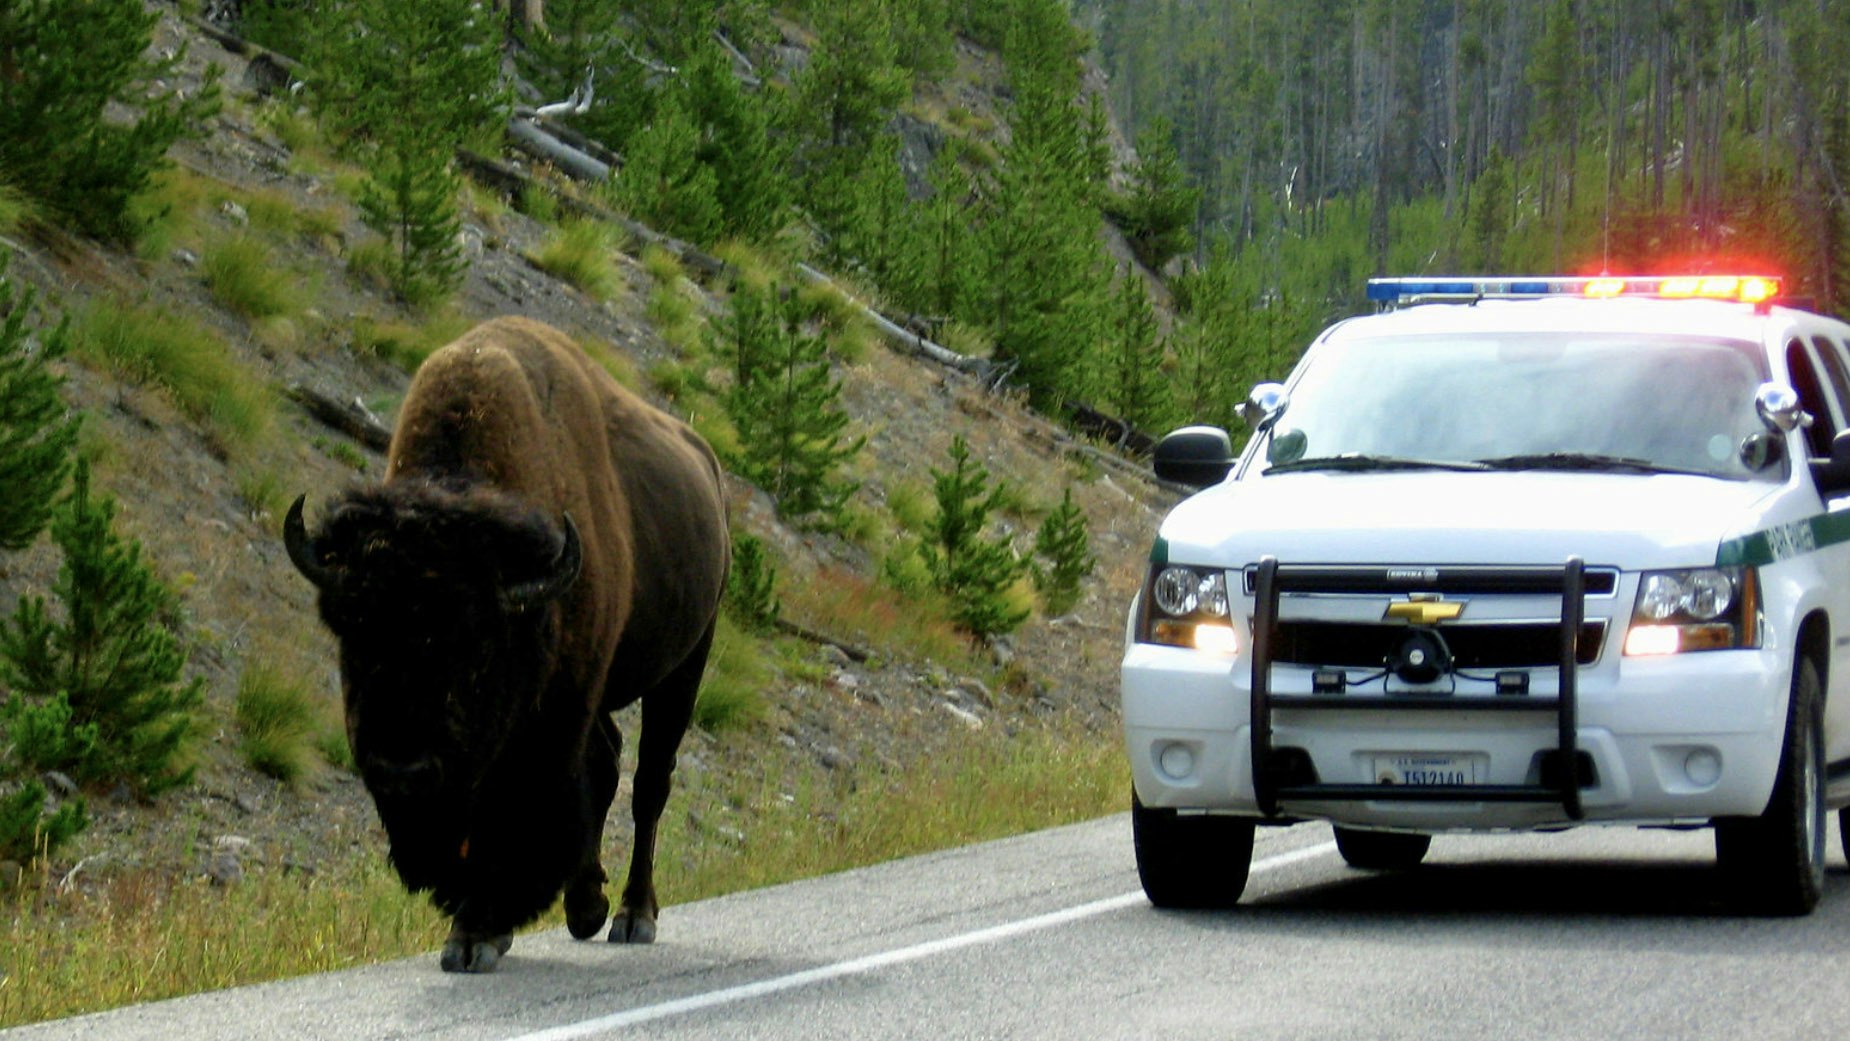 Yellowstone police